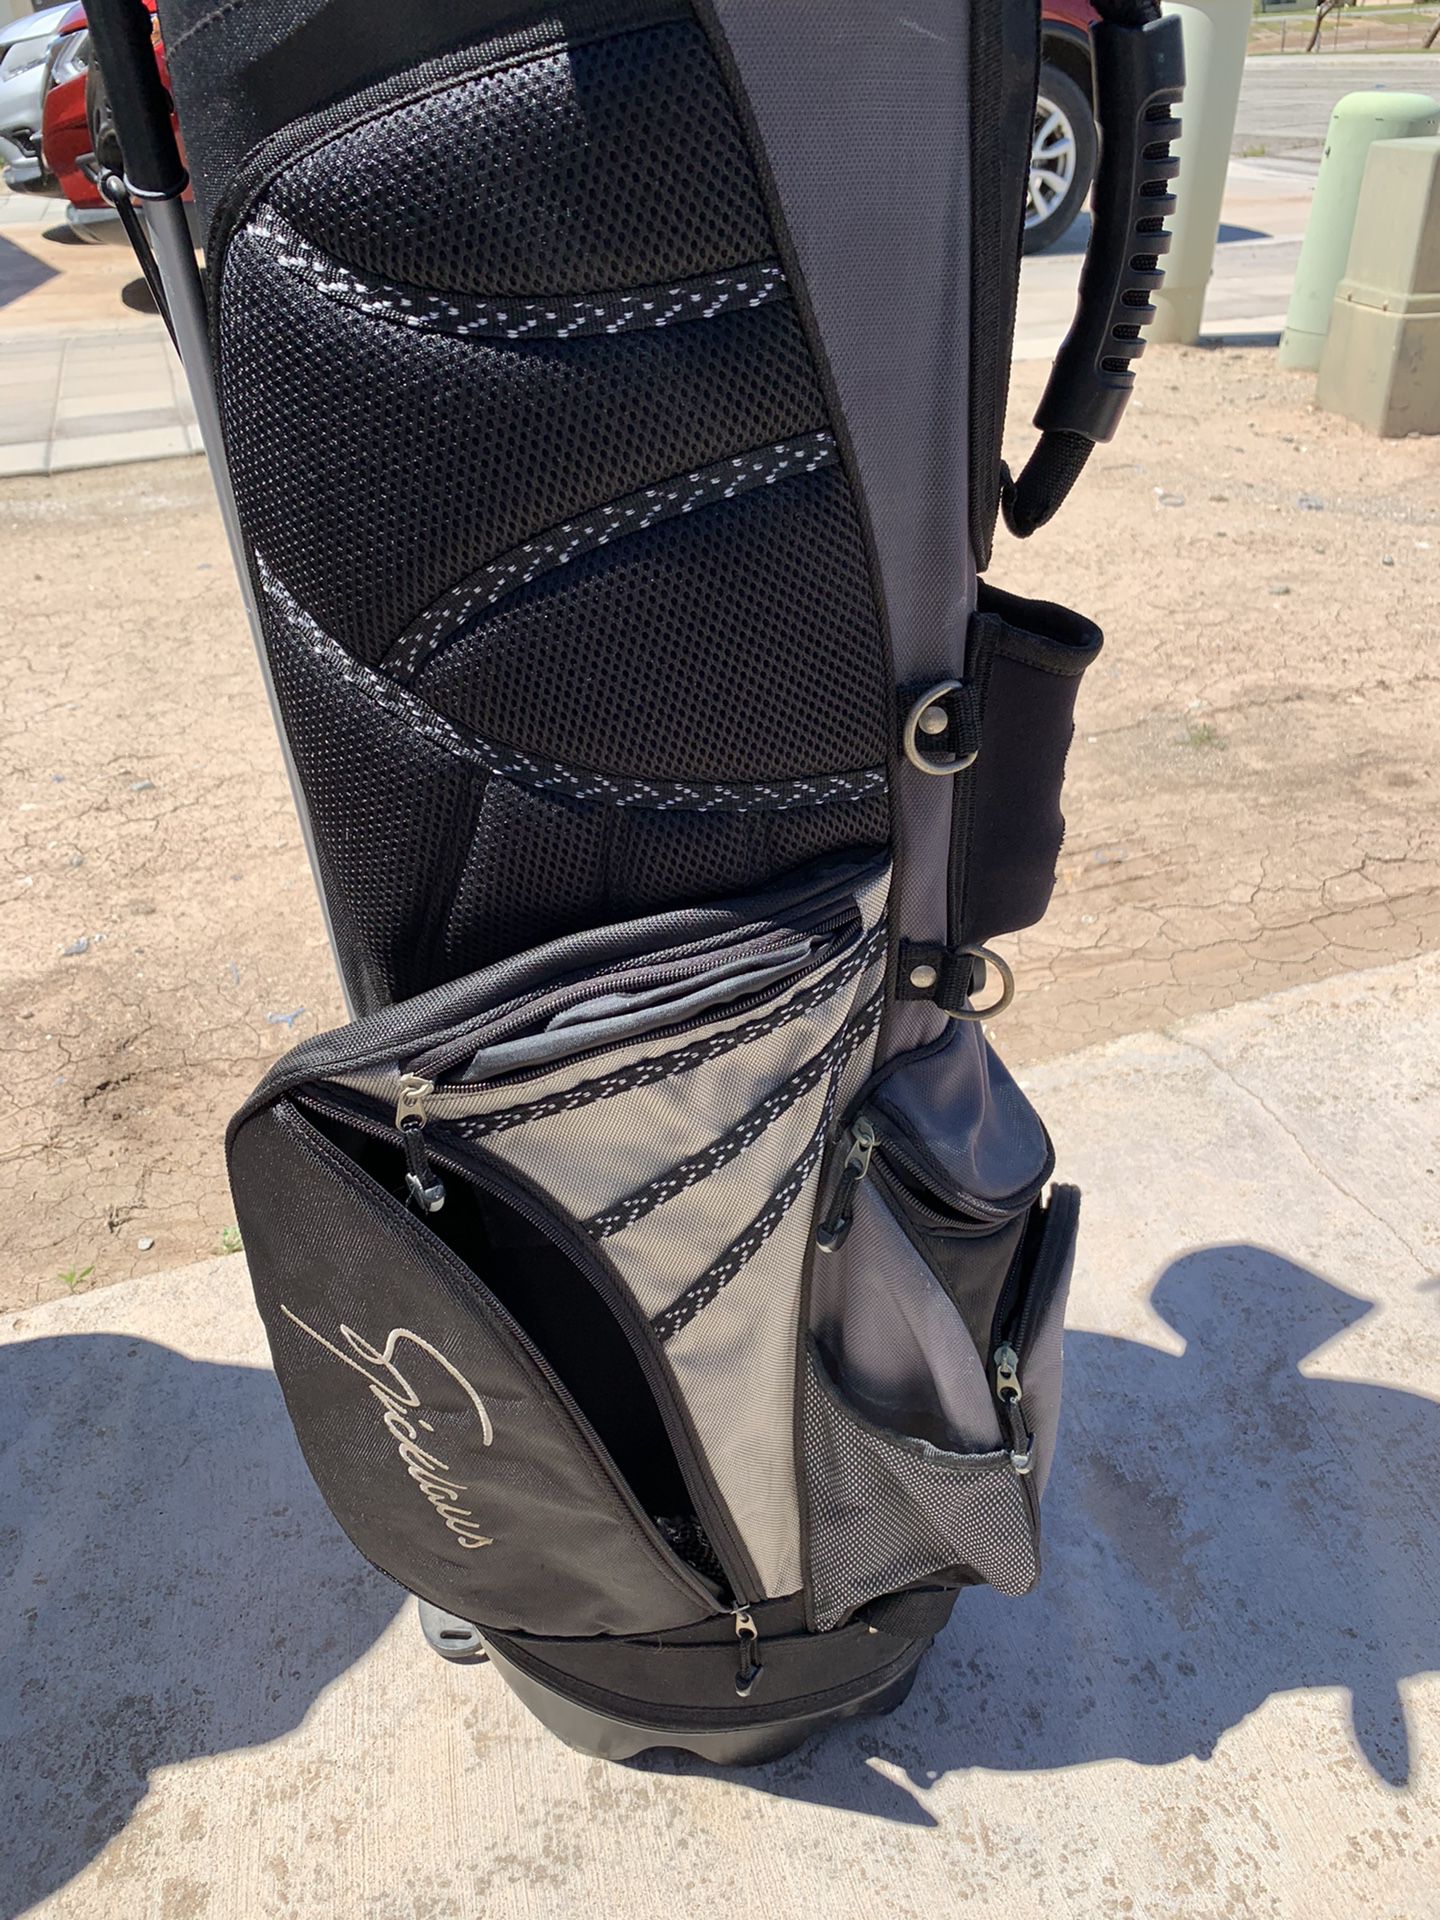 Nicklaus golf bag